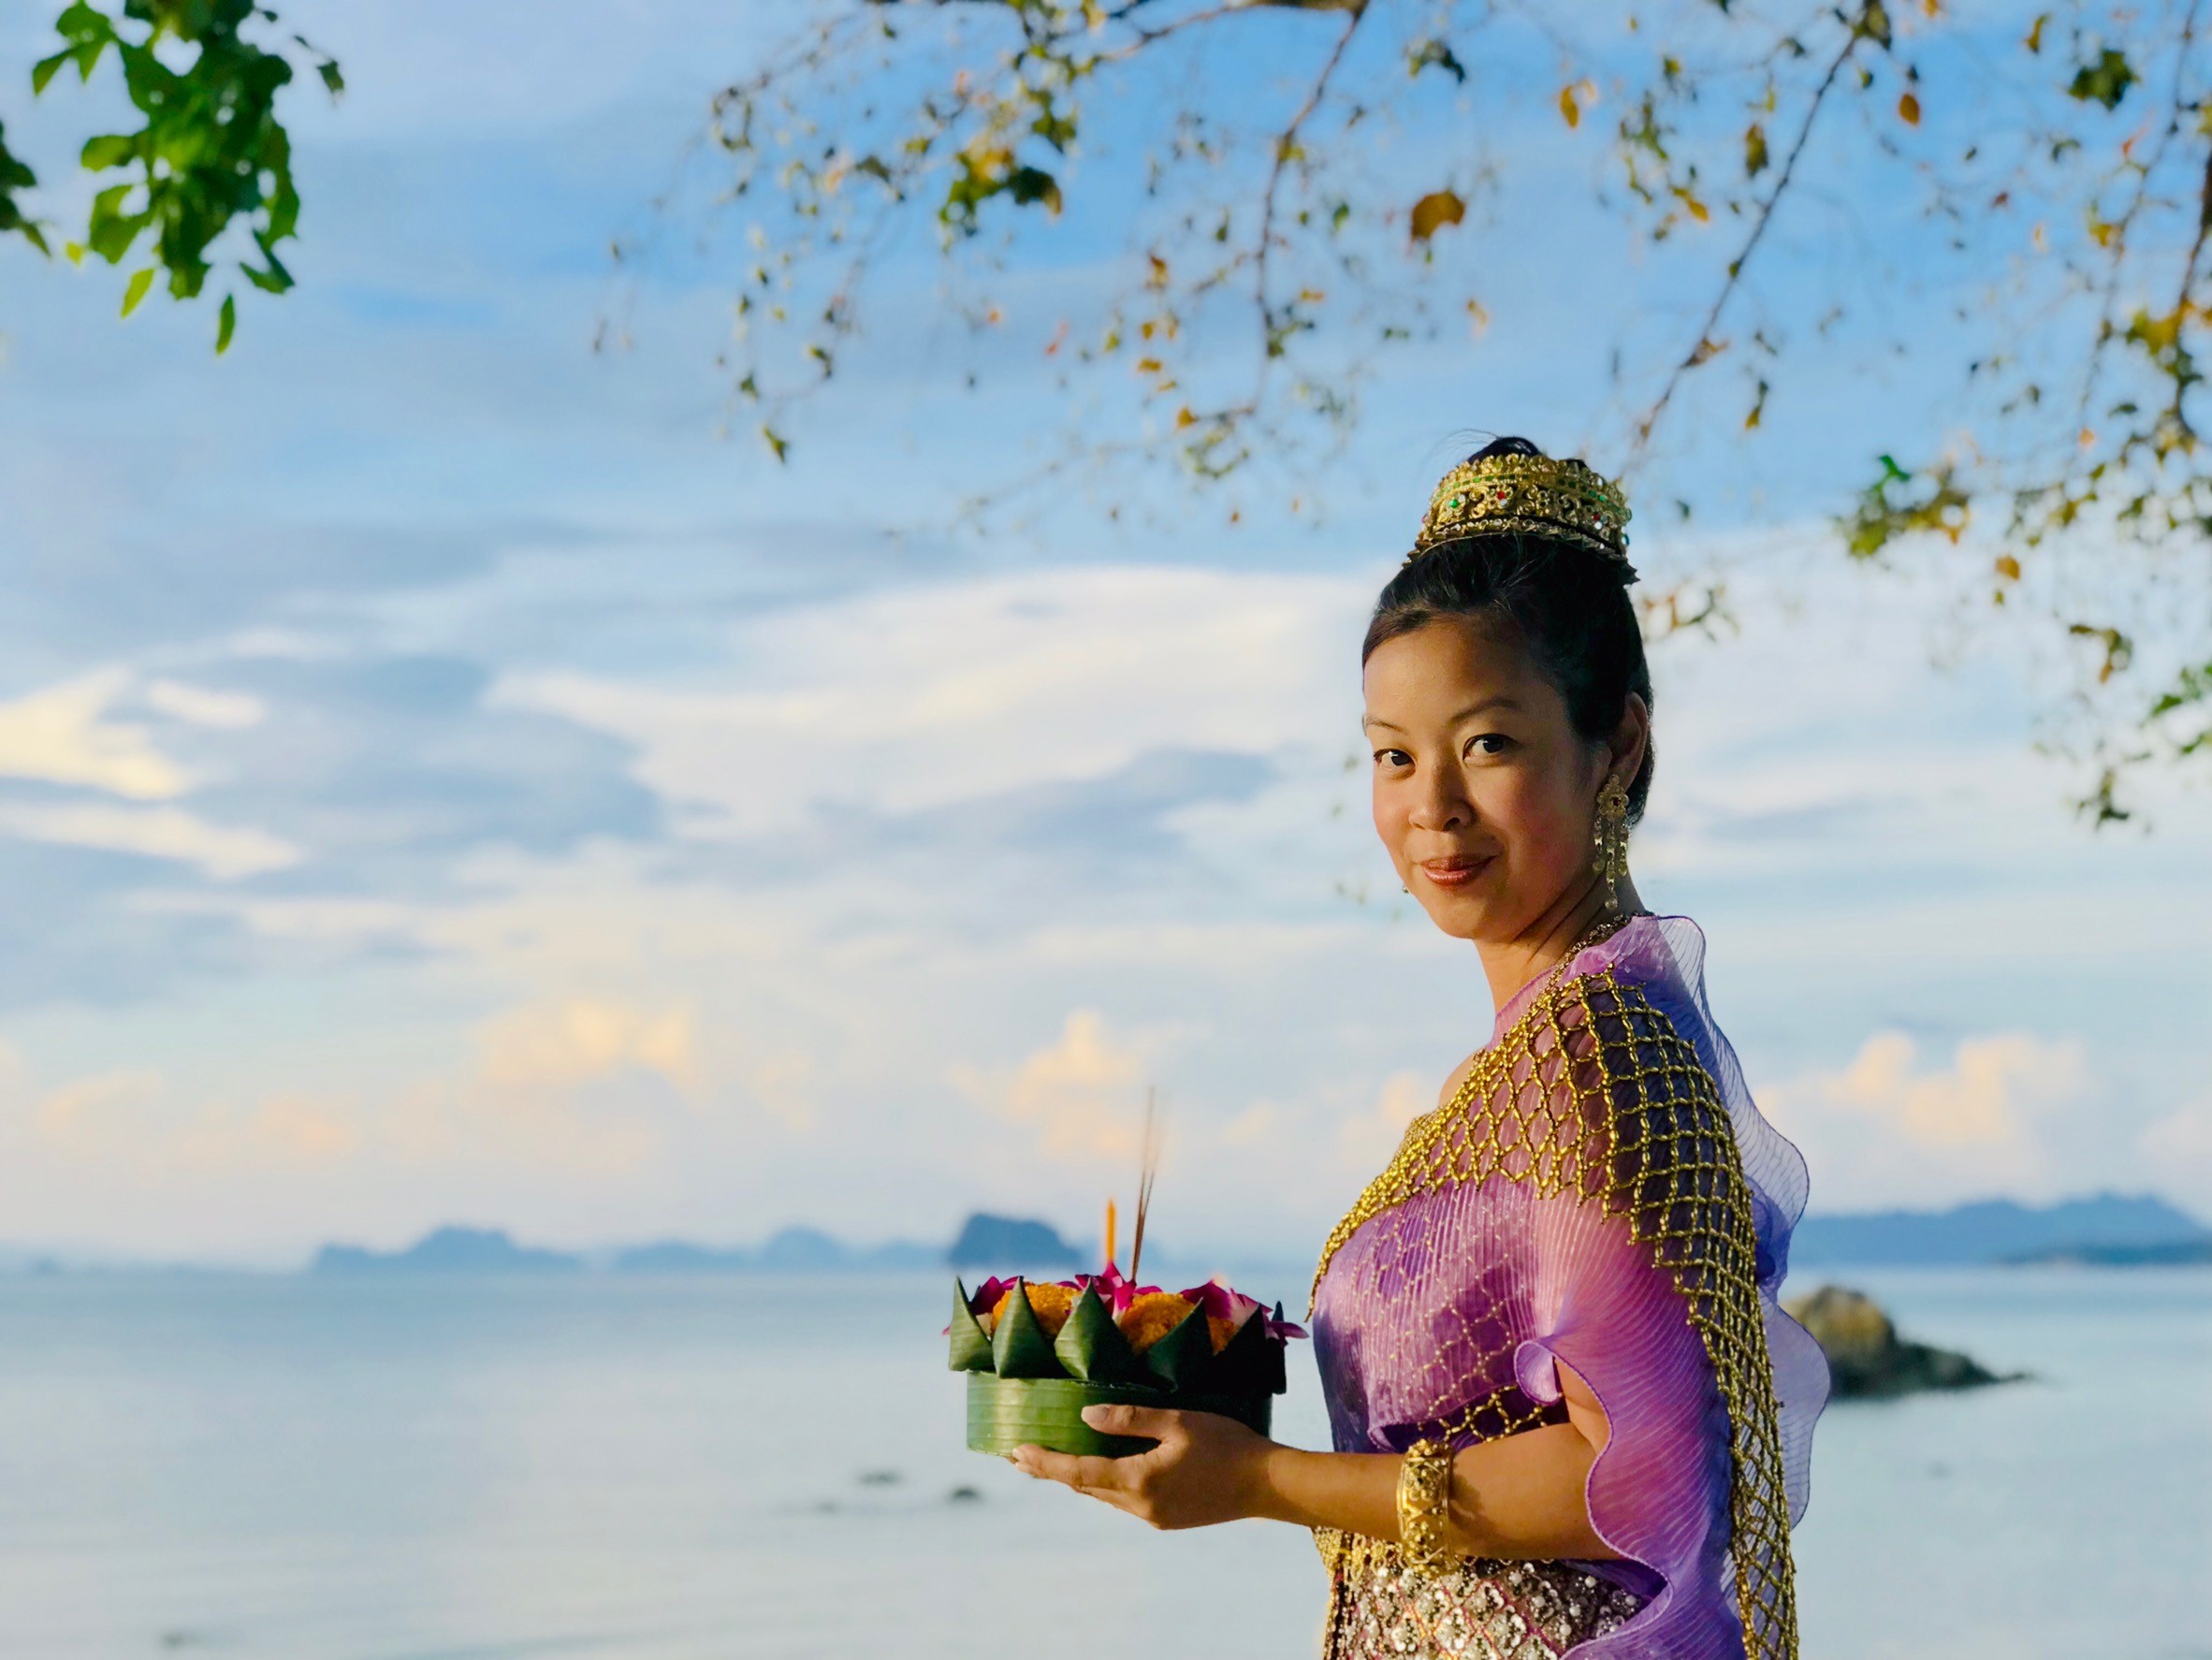 GM Ritz Carlton Phulay Bay, Ruby Garcia, in traditional Thai dress